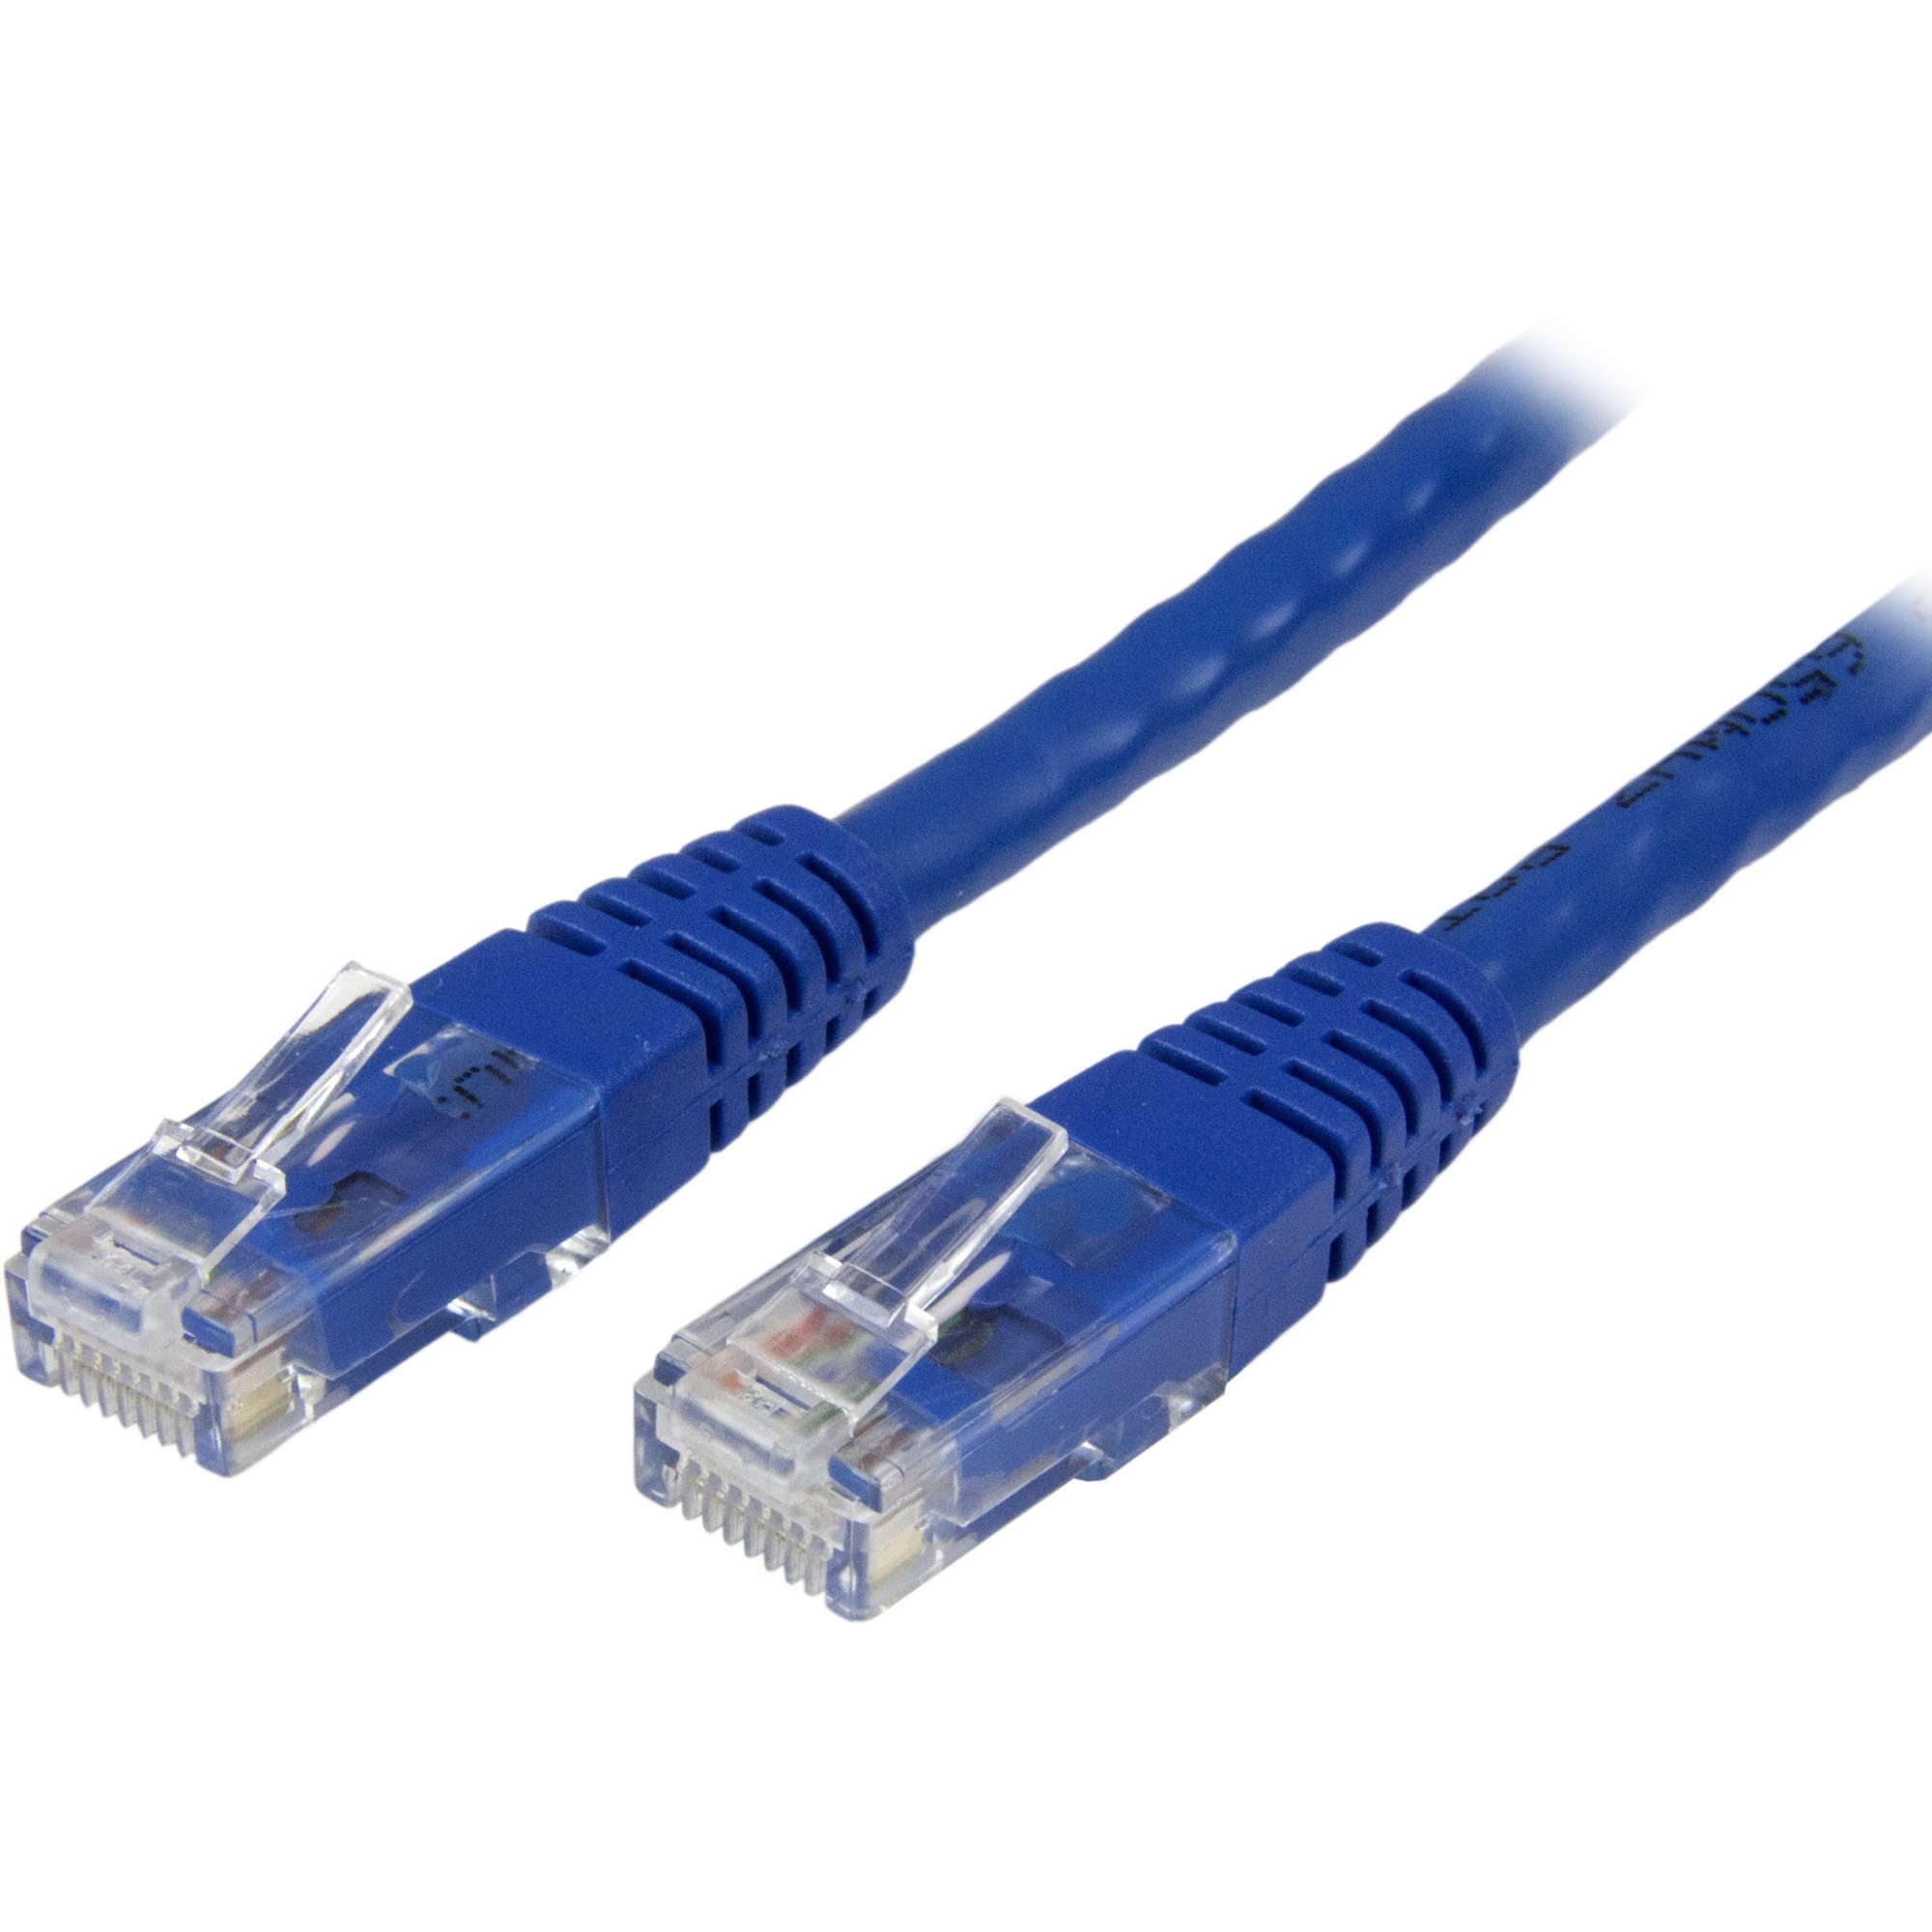 Blue Cat6 UTP Patch Cable